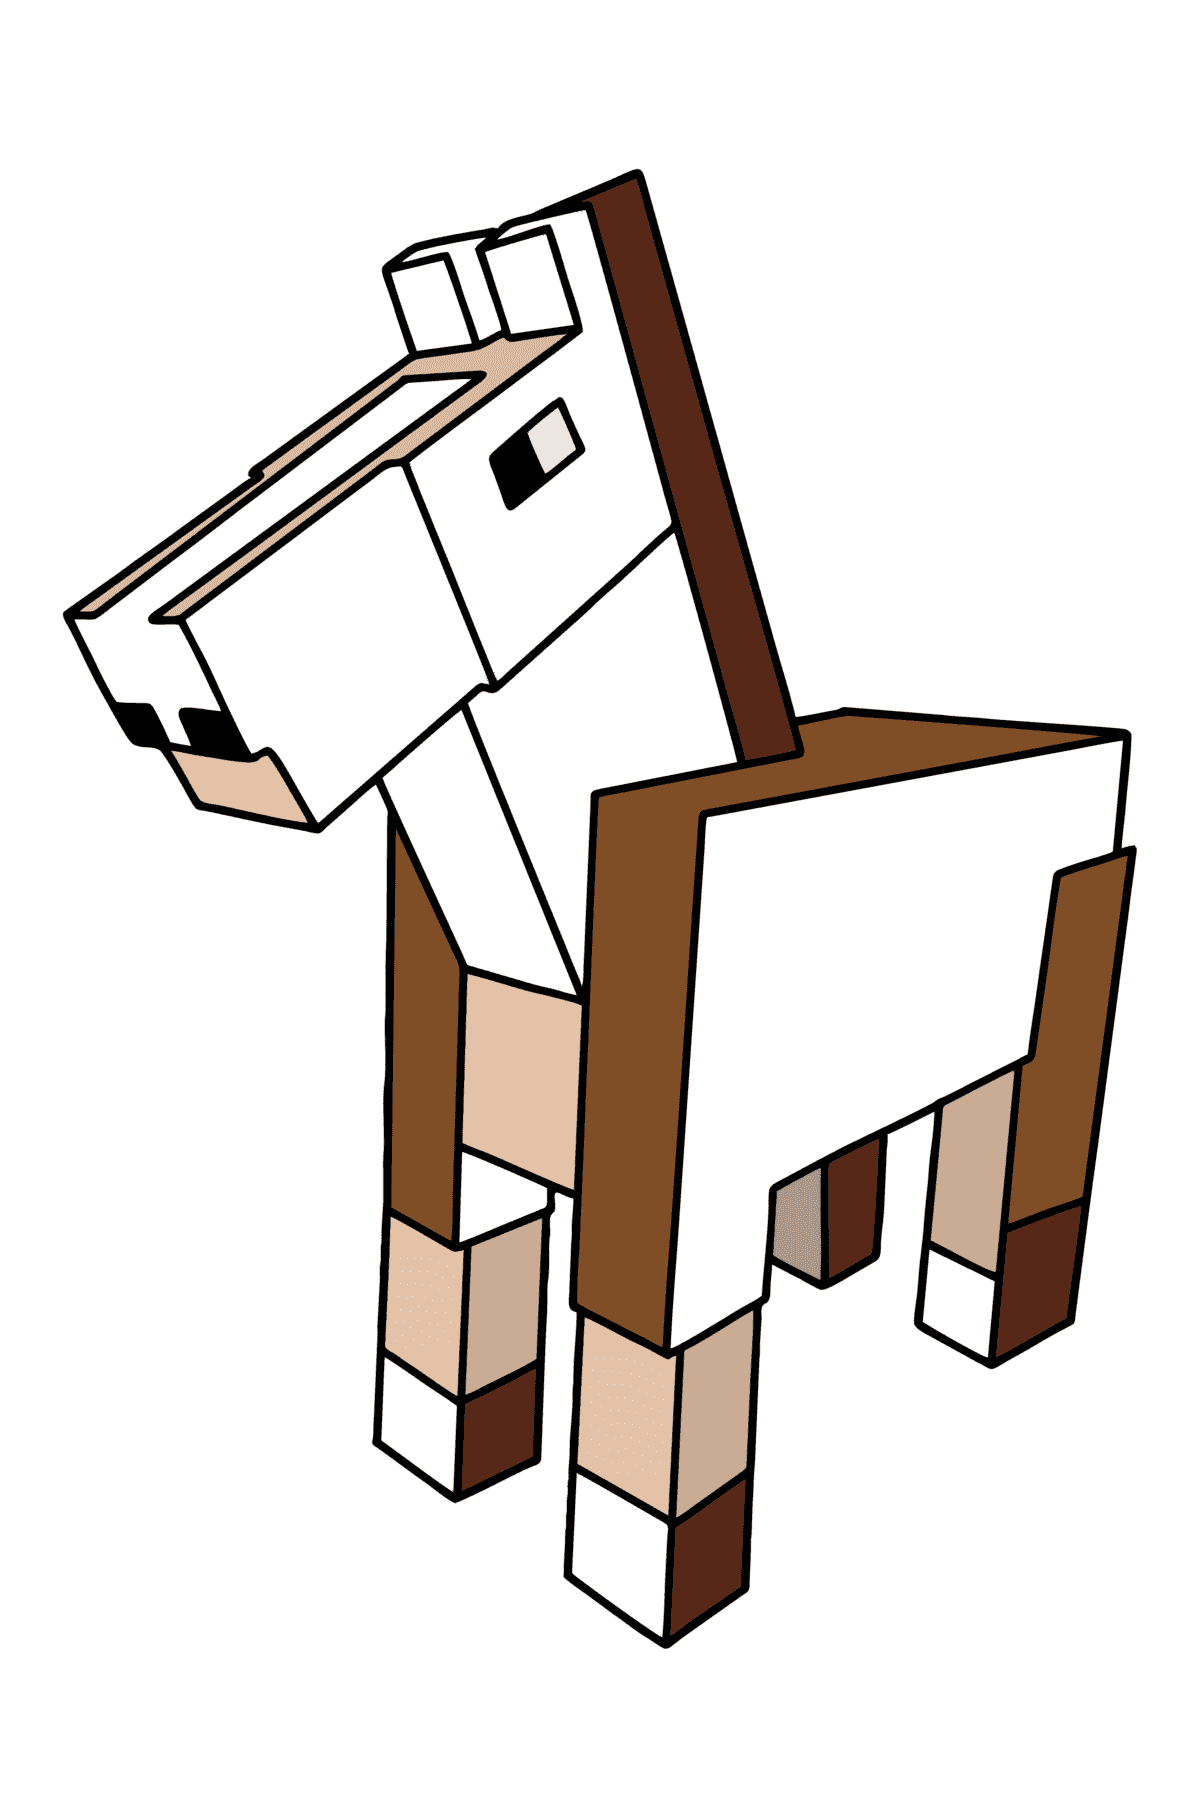 Mewarnai gambar Minecraft Horse - Mewarnai gambar untuk anak-anak